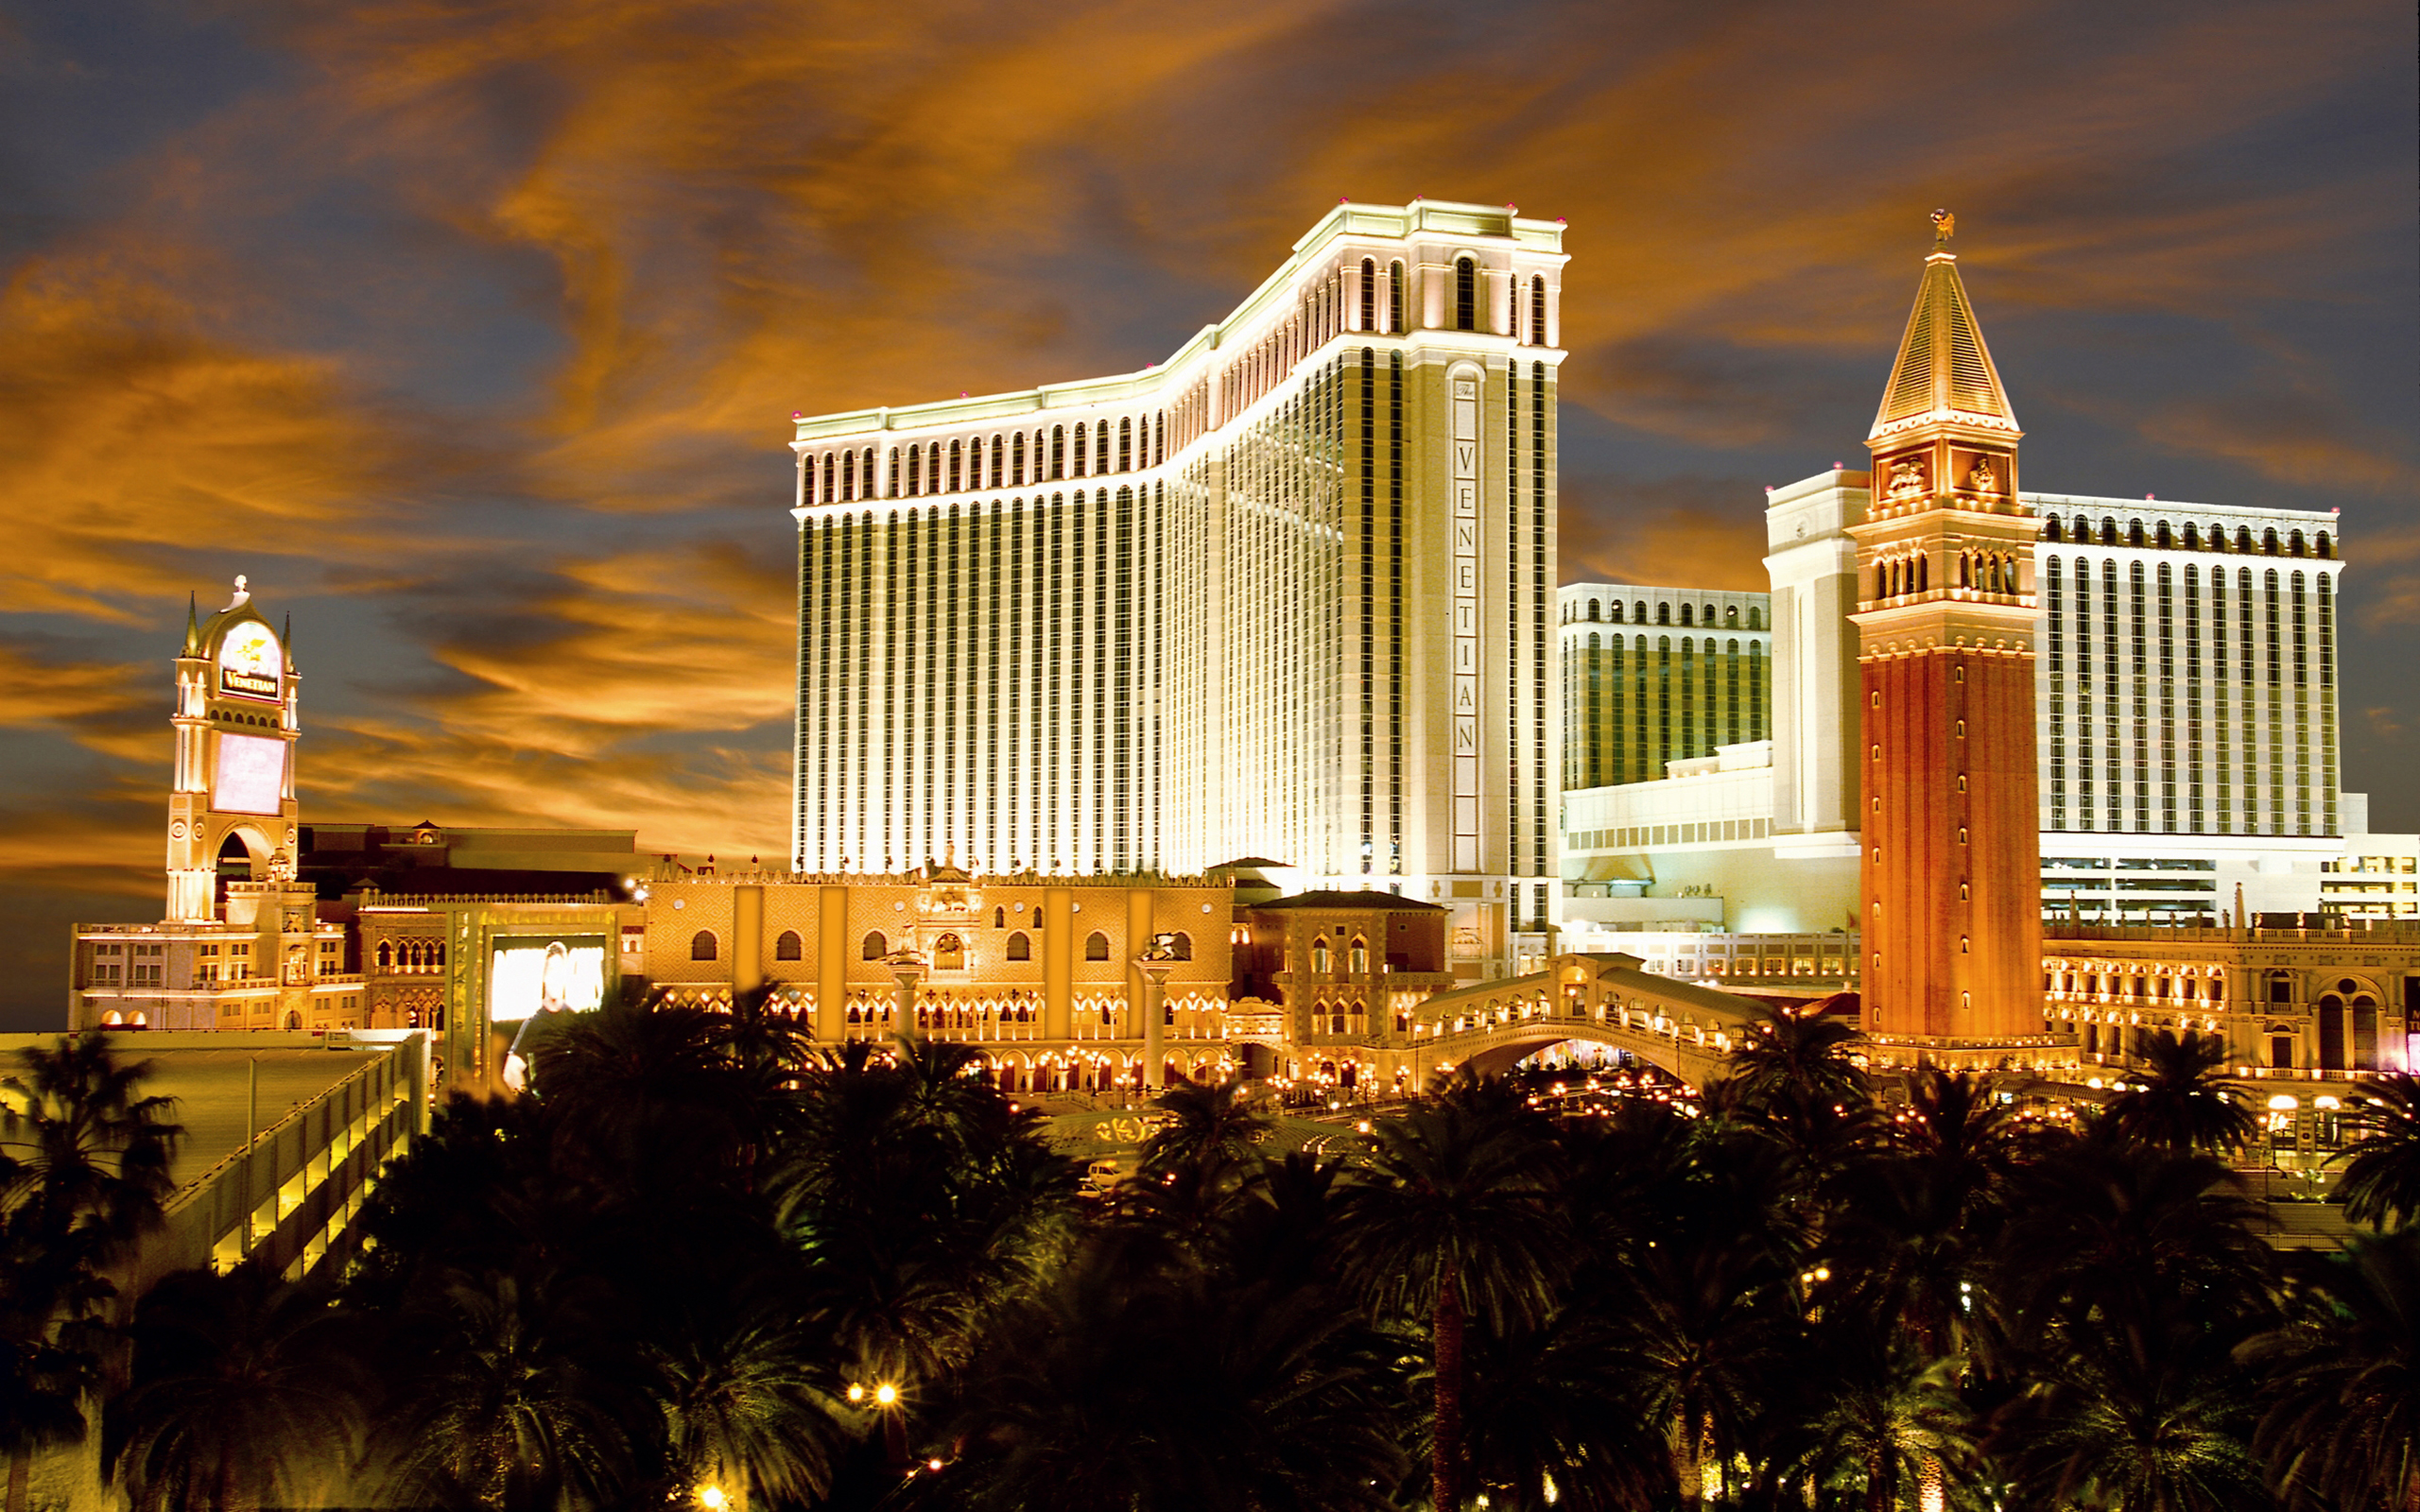 Hotels Las Vegas GГјnstig